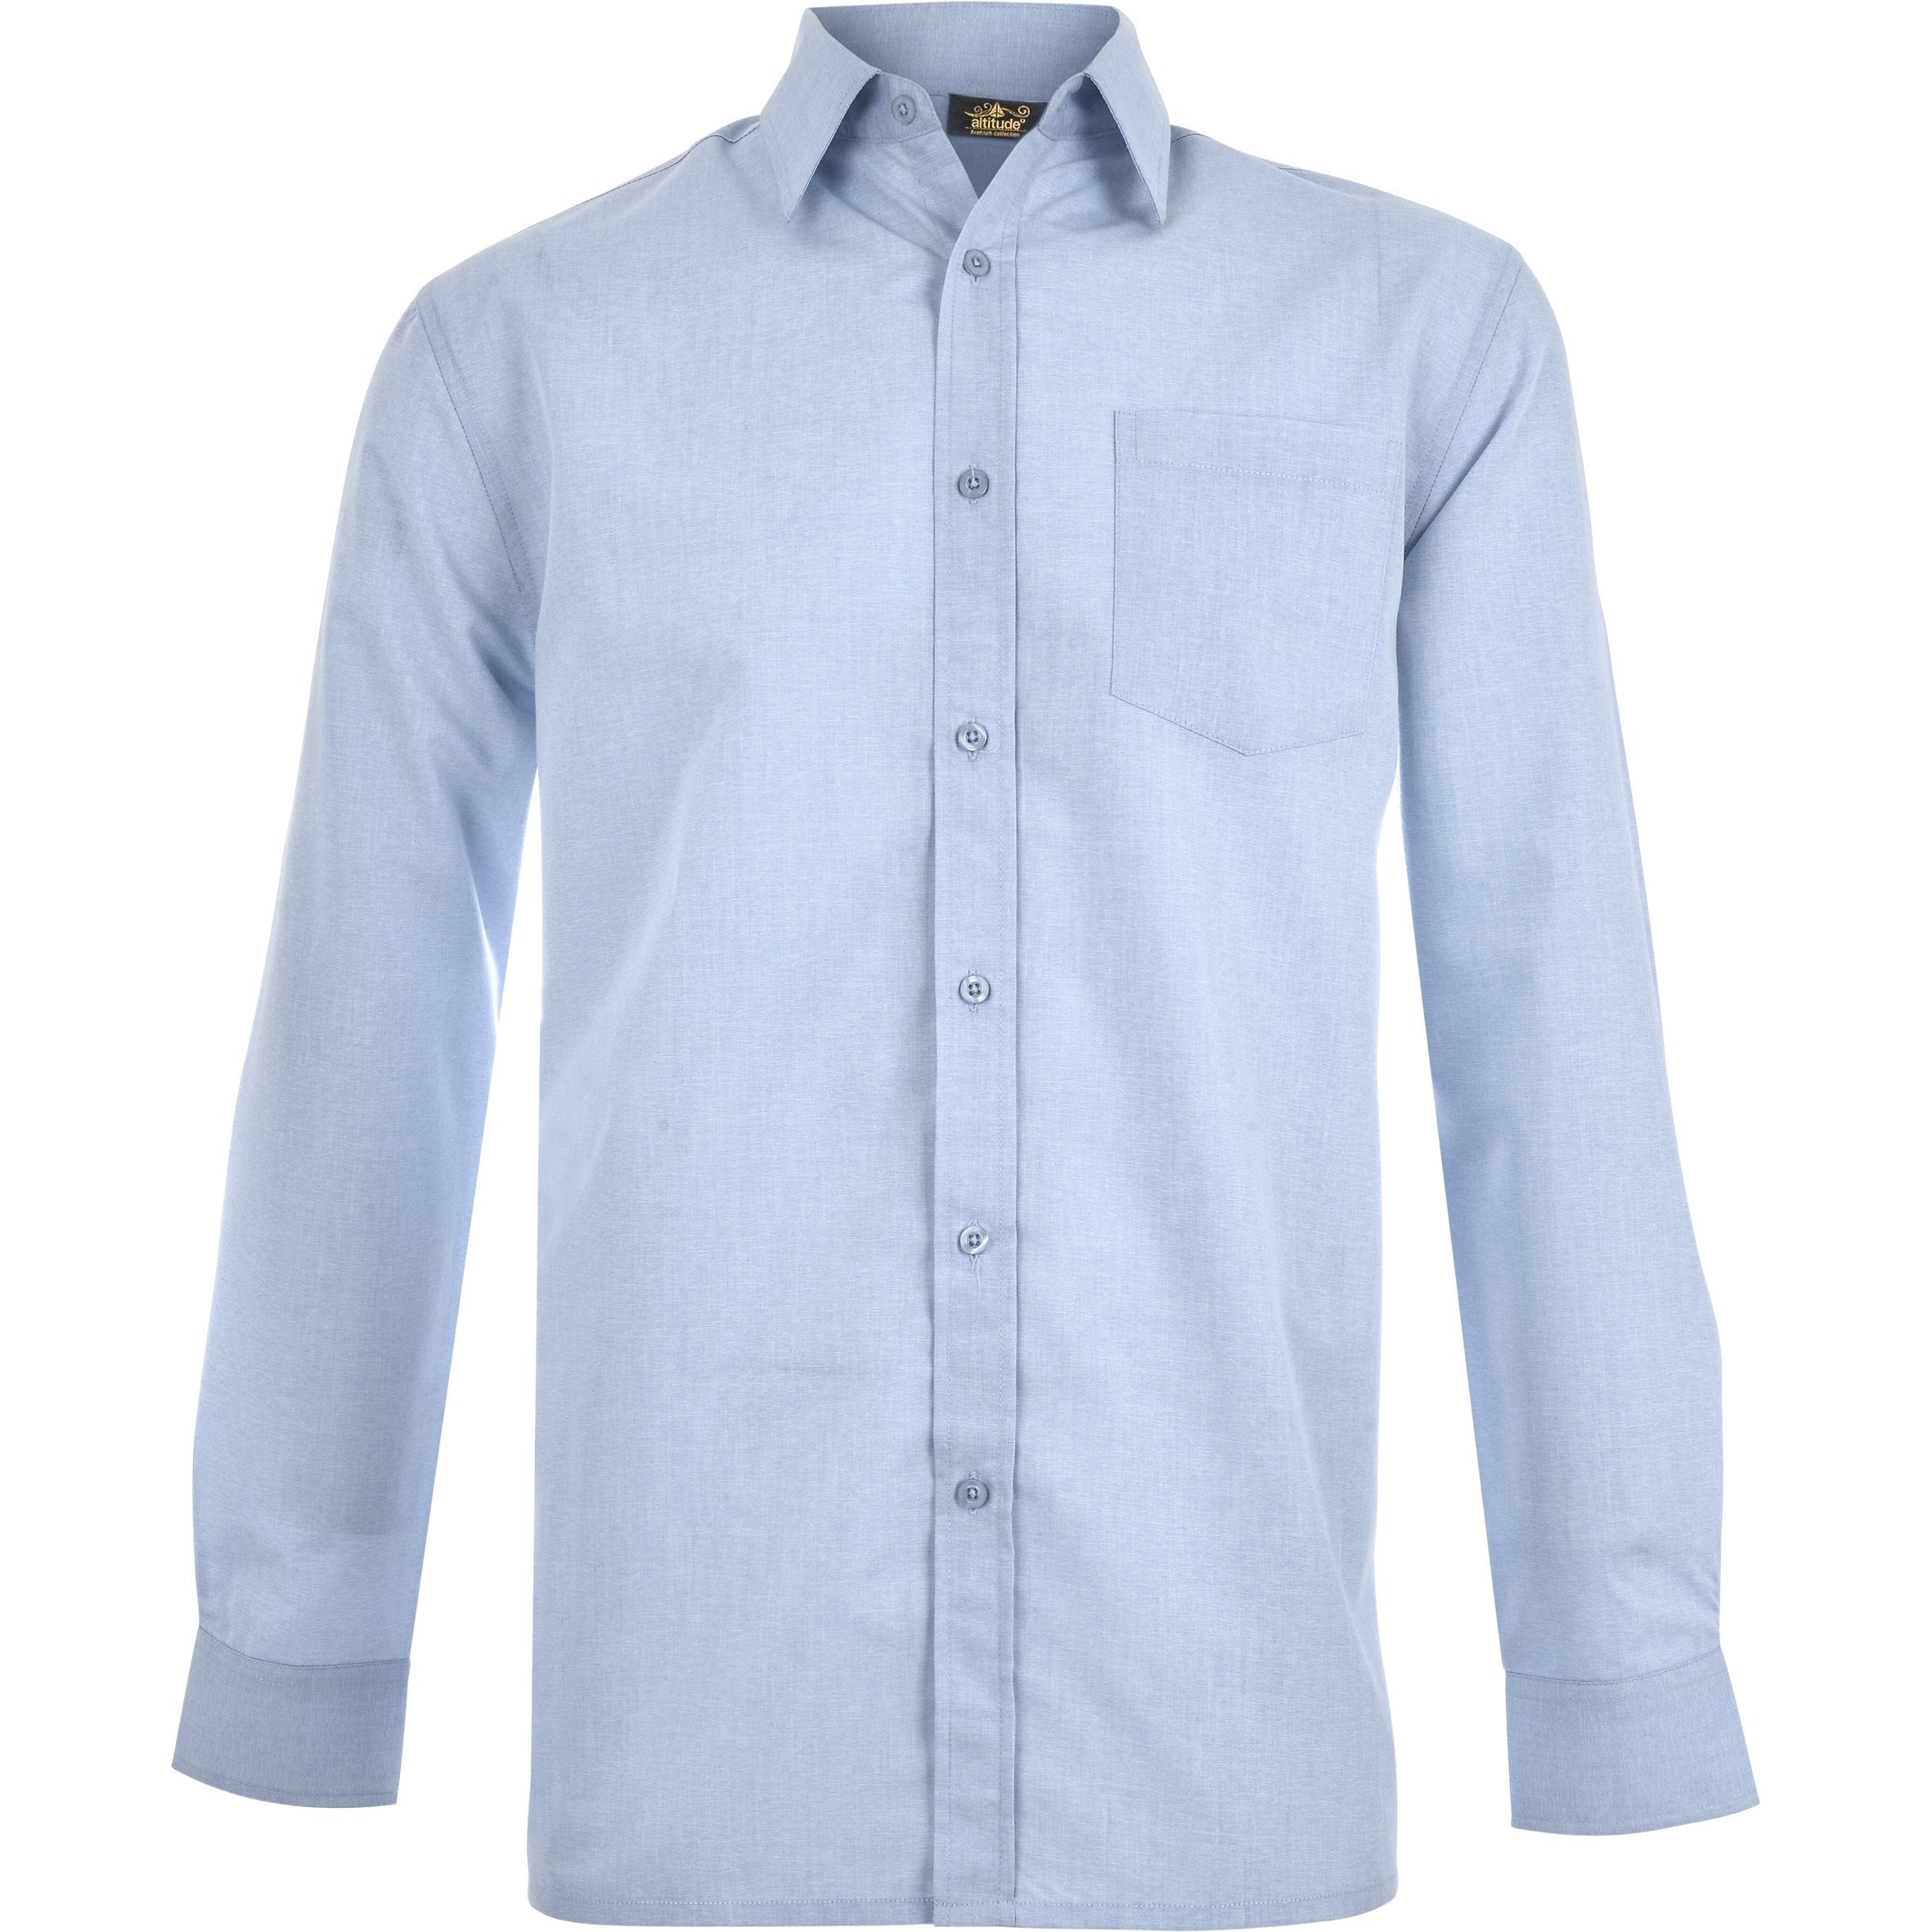 Mens Long Sleeve Apollo Shirt - Light Blue Only-